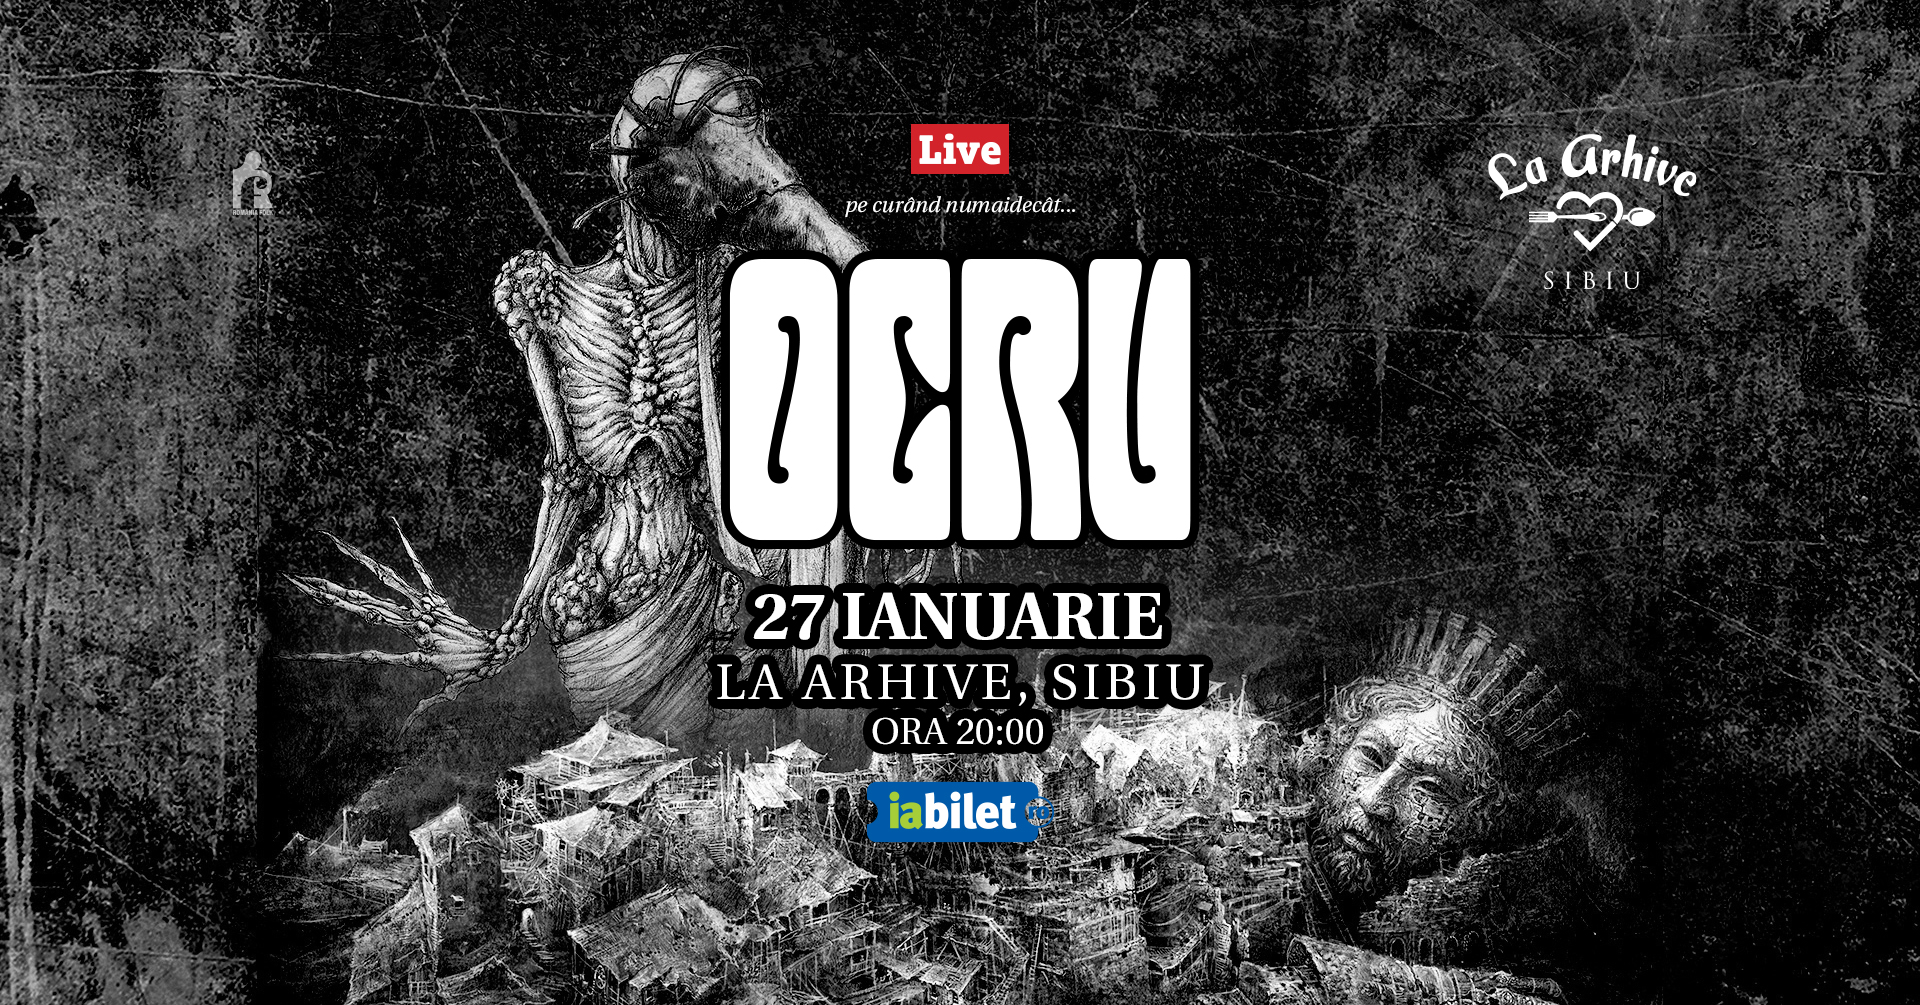 Sibiu: OCRU Live @La Arhive